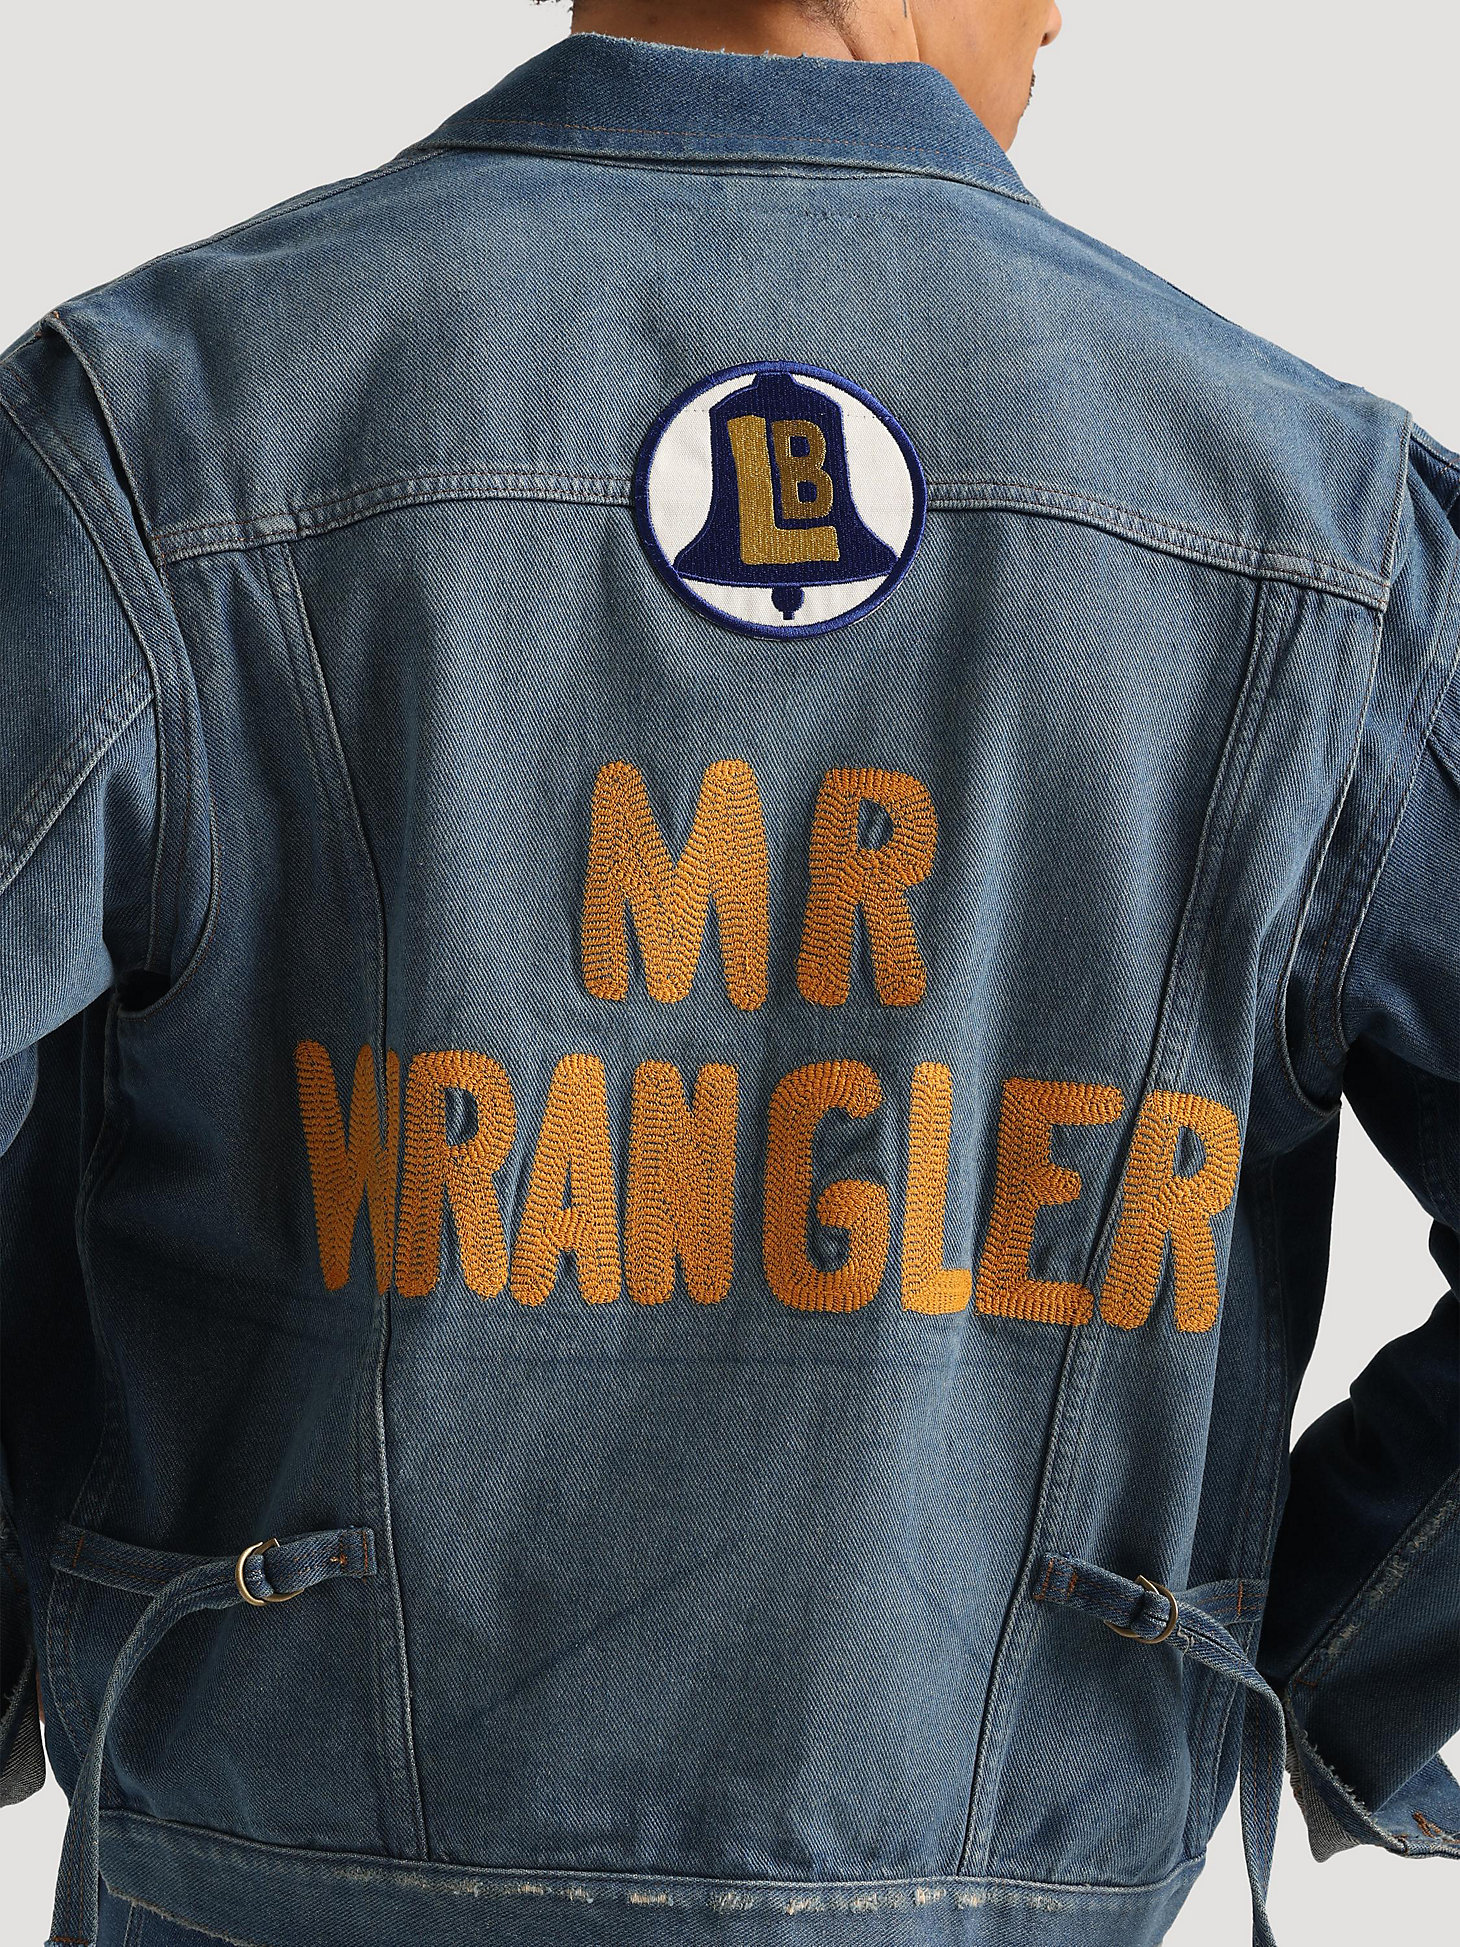 Wrangler X Leon Bridges Men's 124MJ Jacket in Worn Indgo alternative view 7